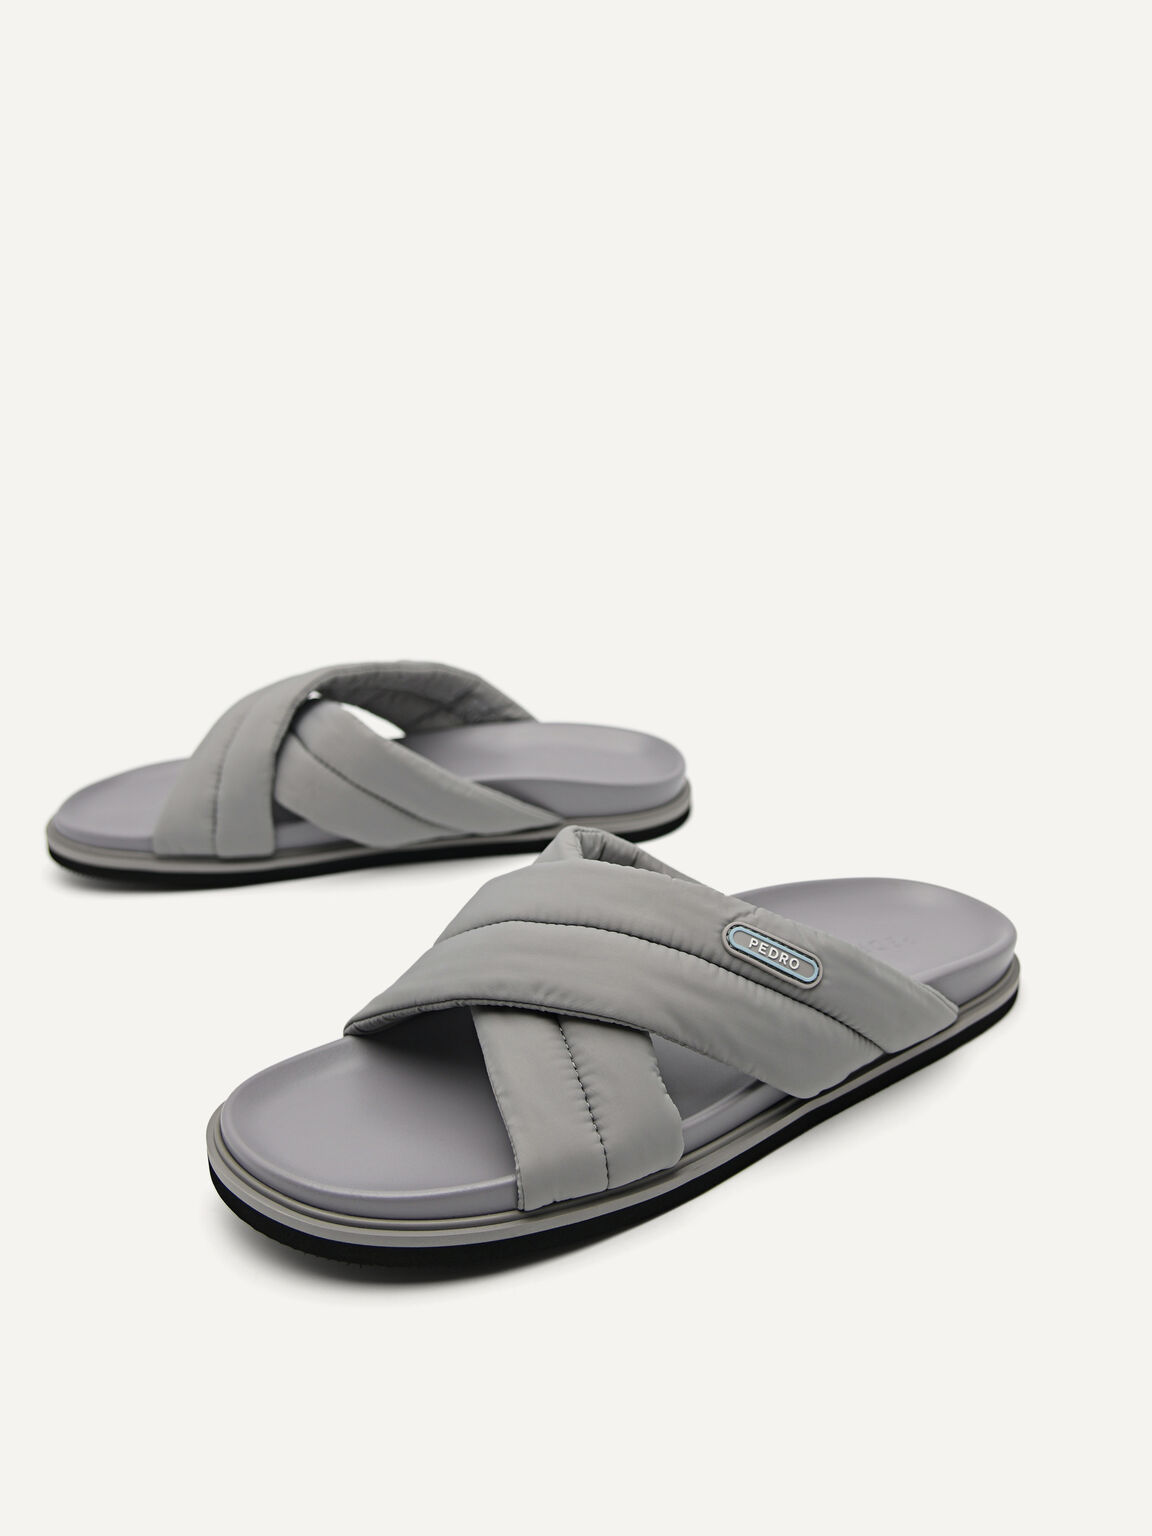 Nylon Puffy Cross-strap Sandals, Grey